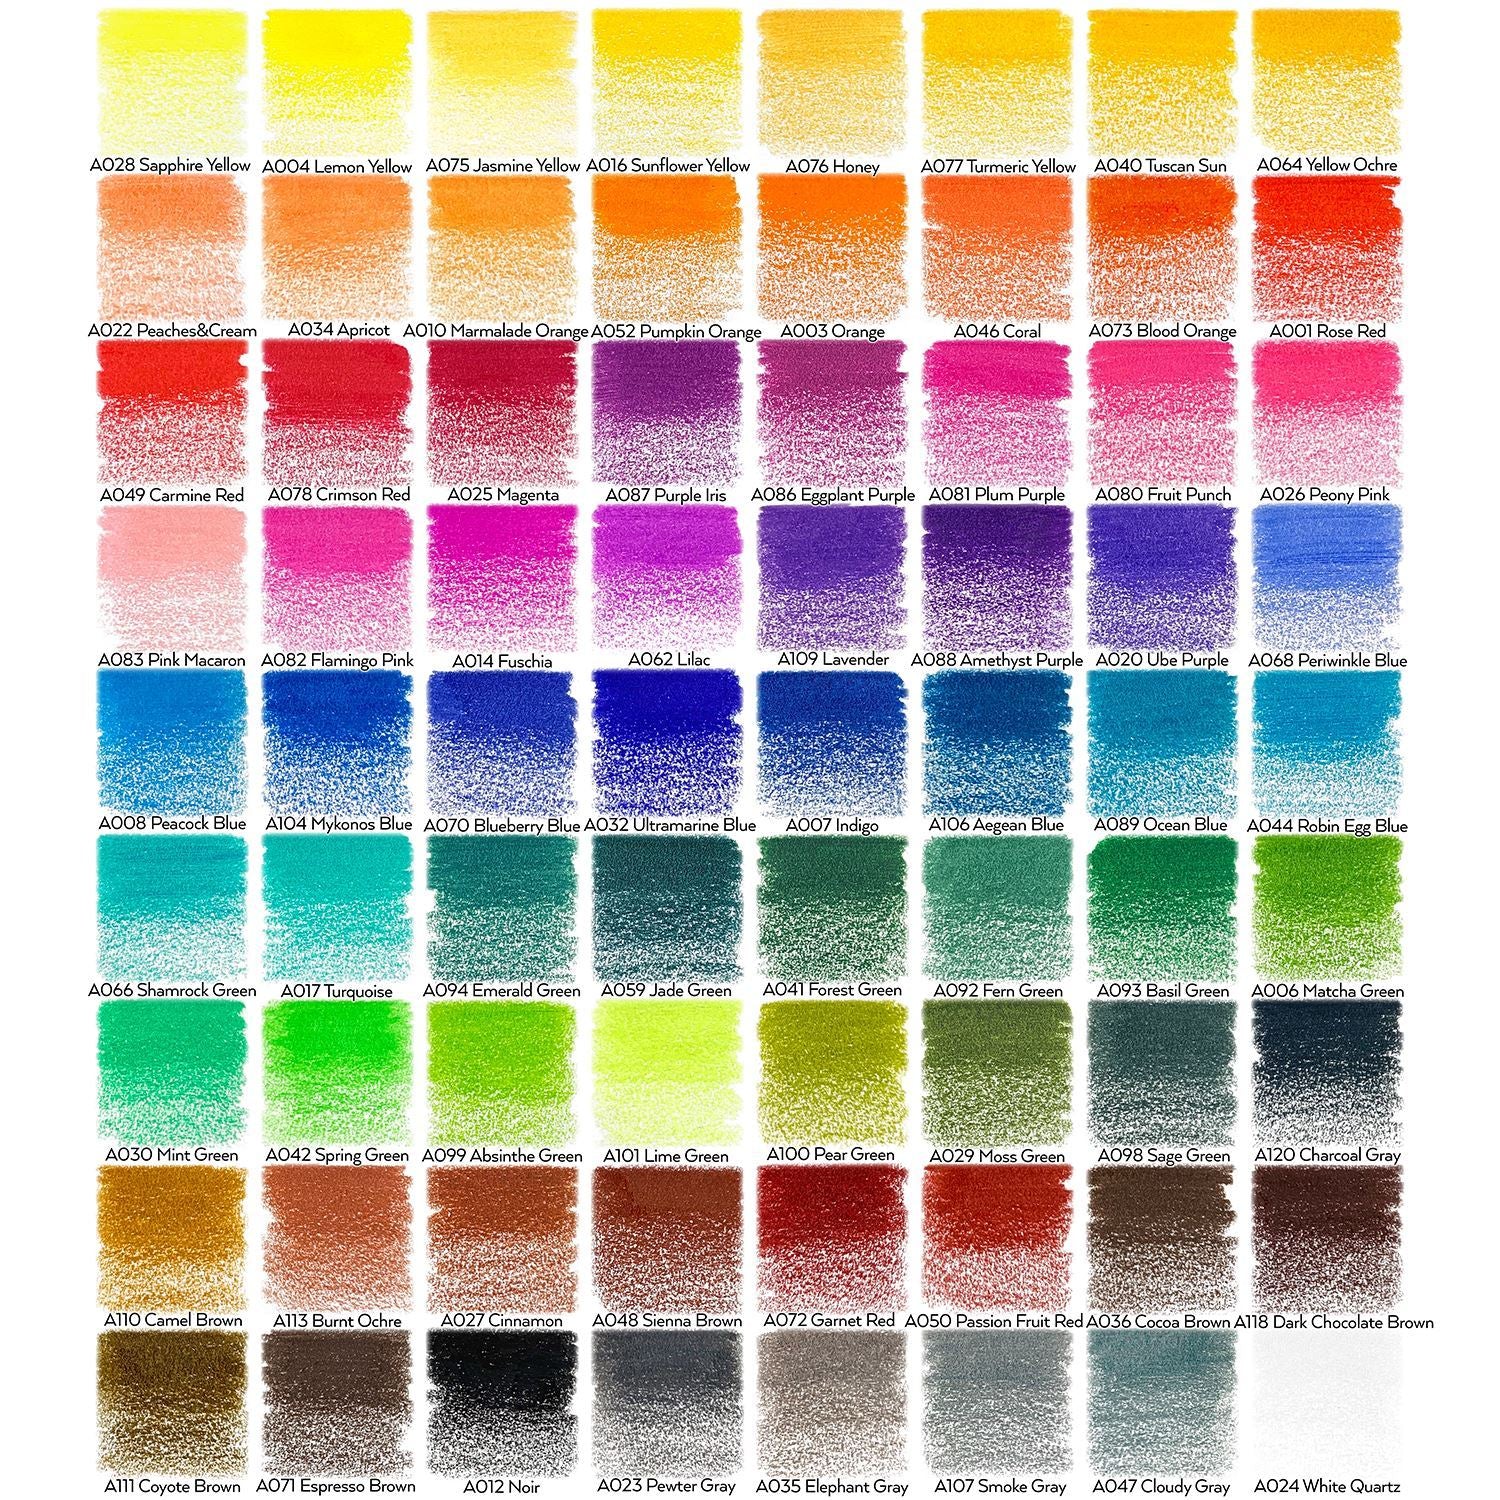 Arteza Professional Colored Pencils, High Pigment Assorted Colors